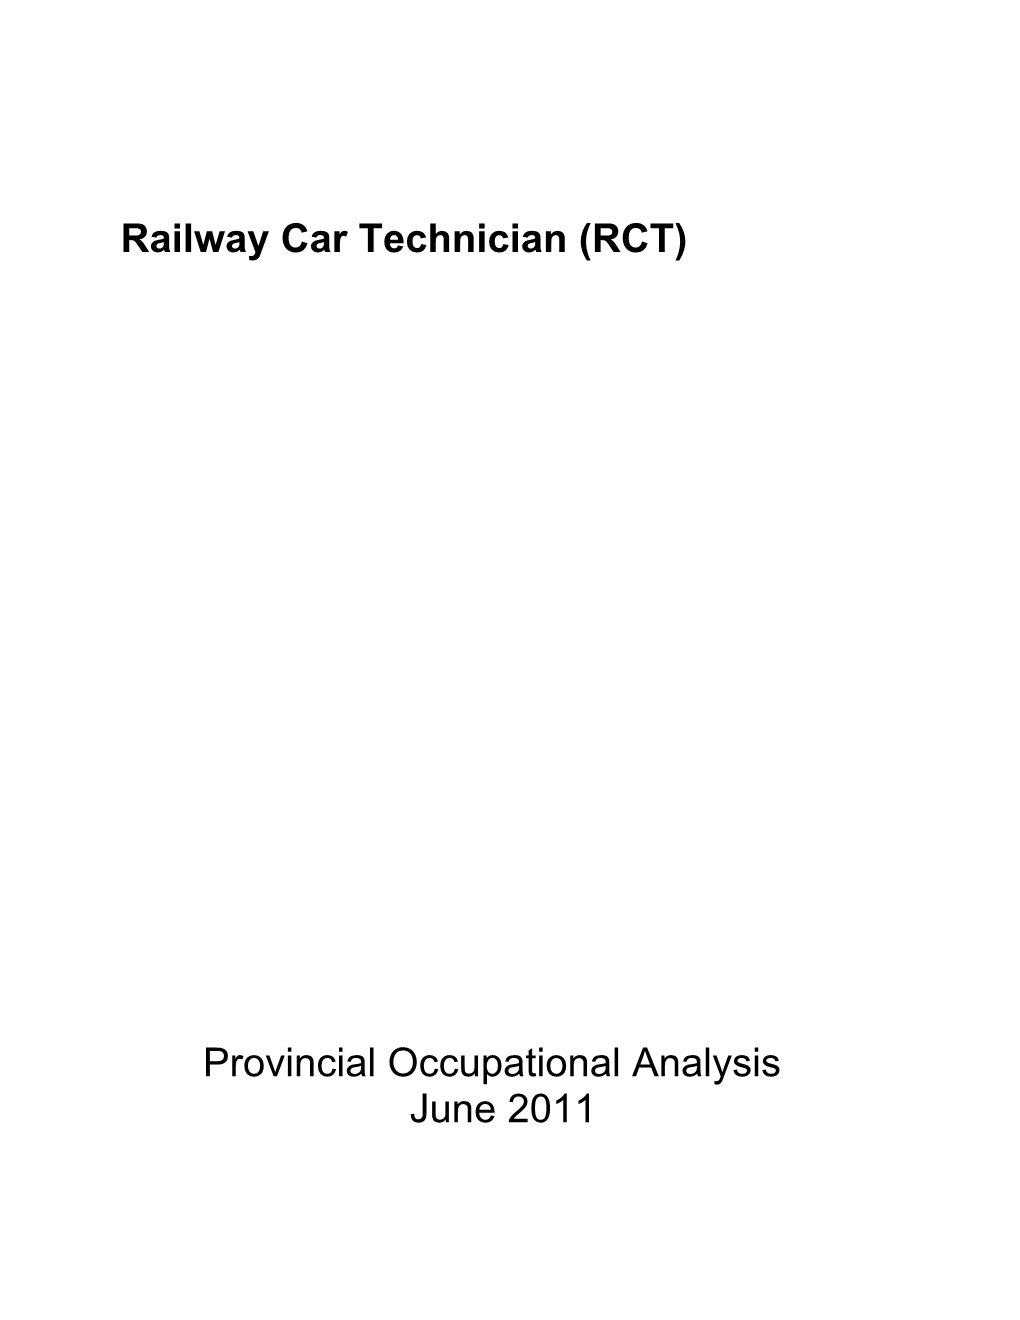 Railway Car Technician (RCT) Provincial Occupational Analysis